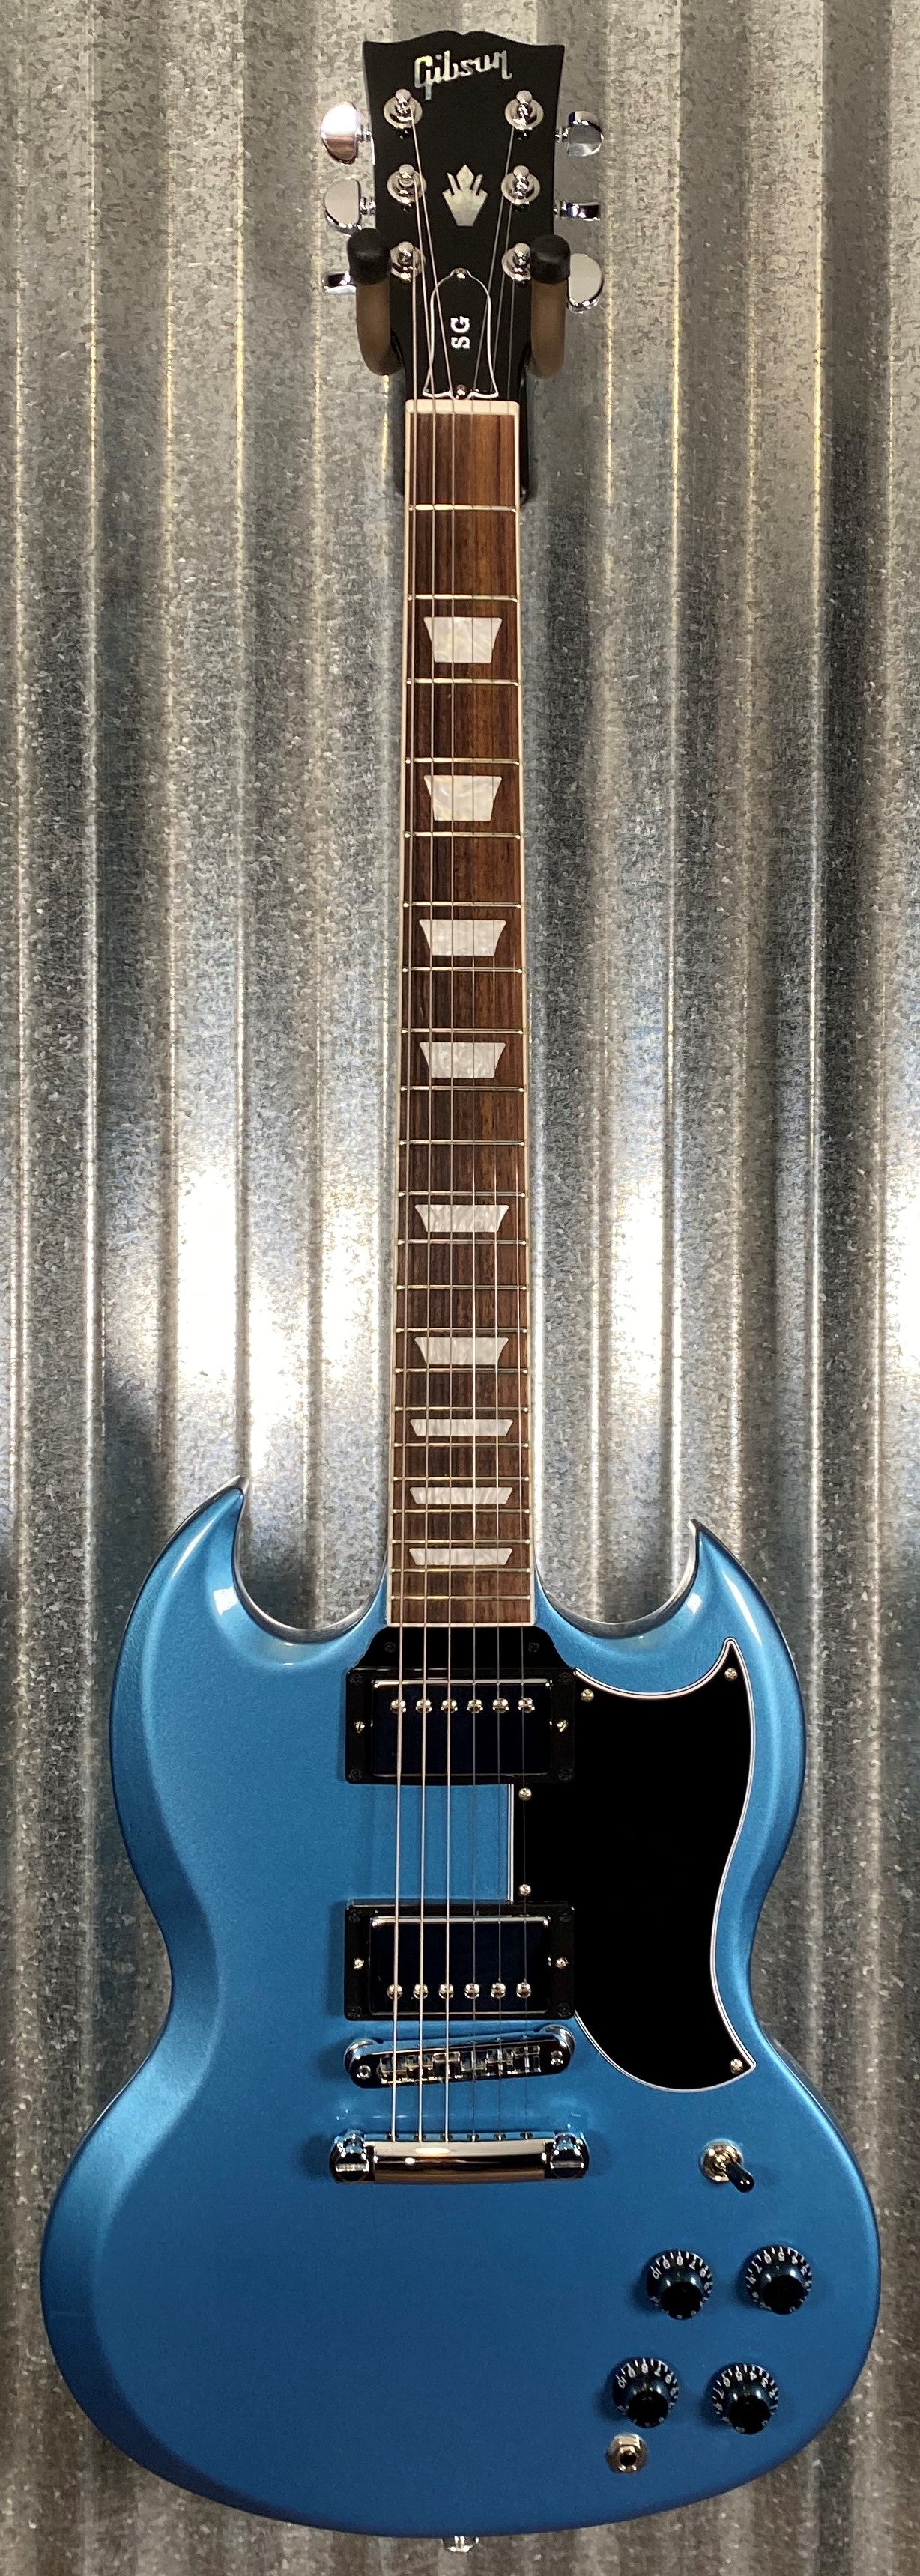 Gibson USA 2017 Standard SG Traditional Limited Edition Pelham Blue Gu